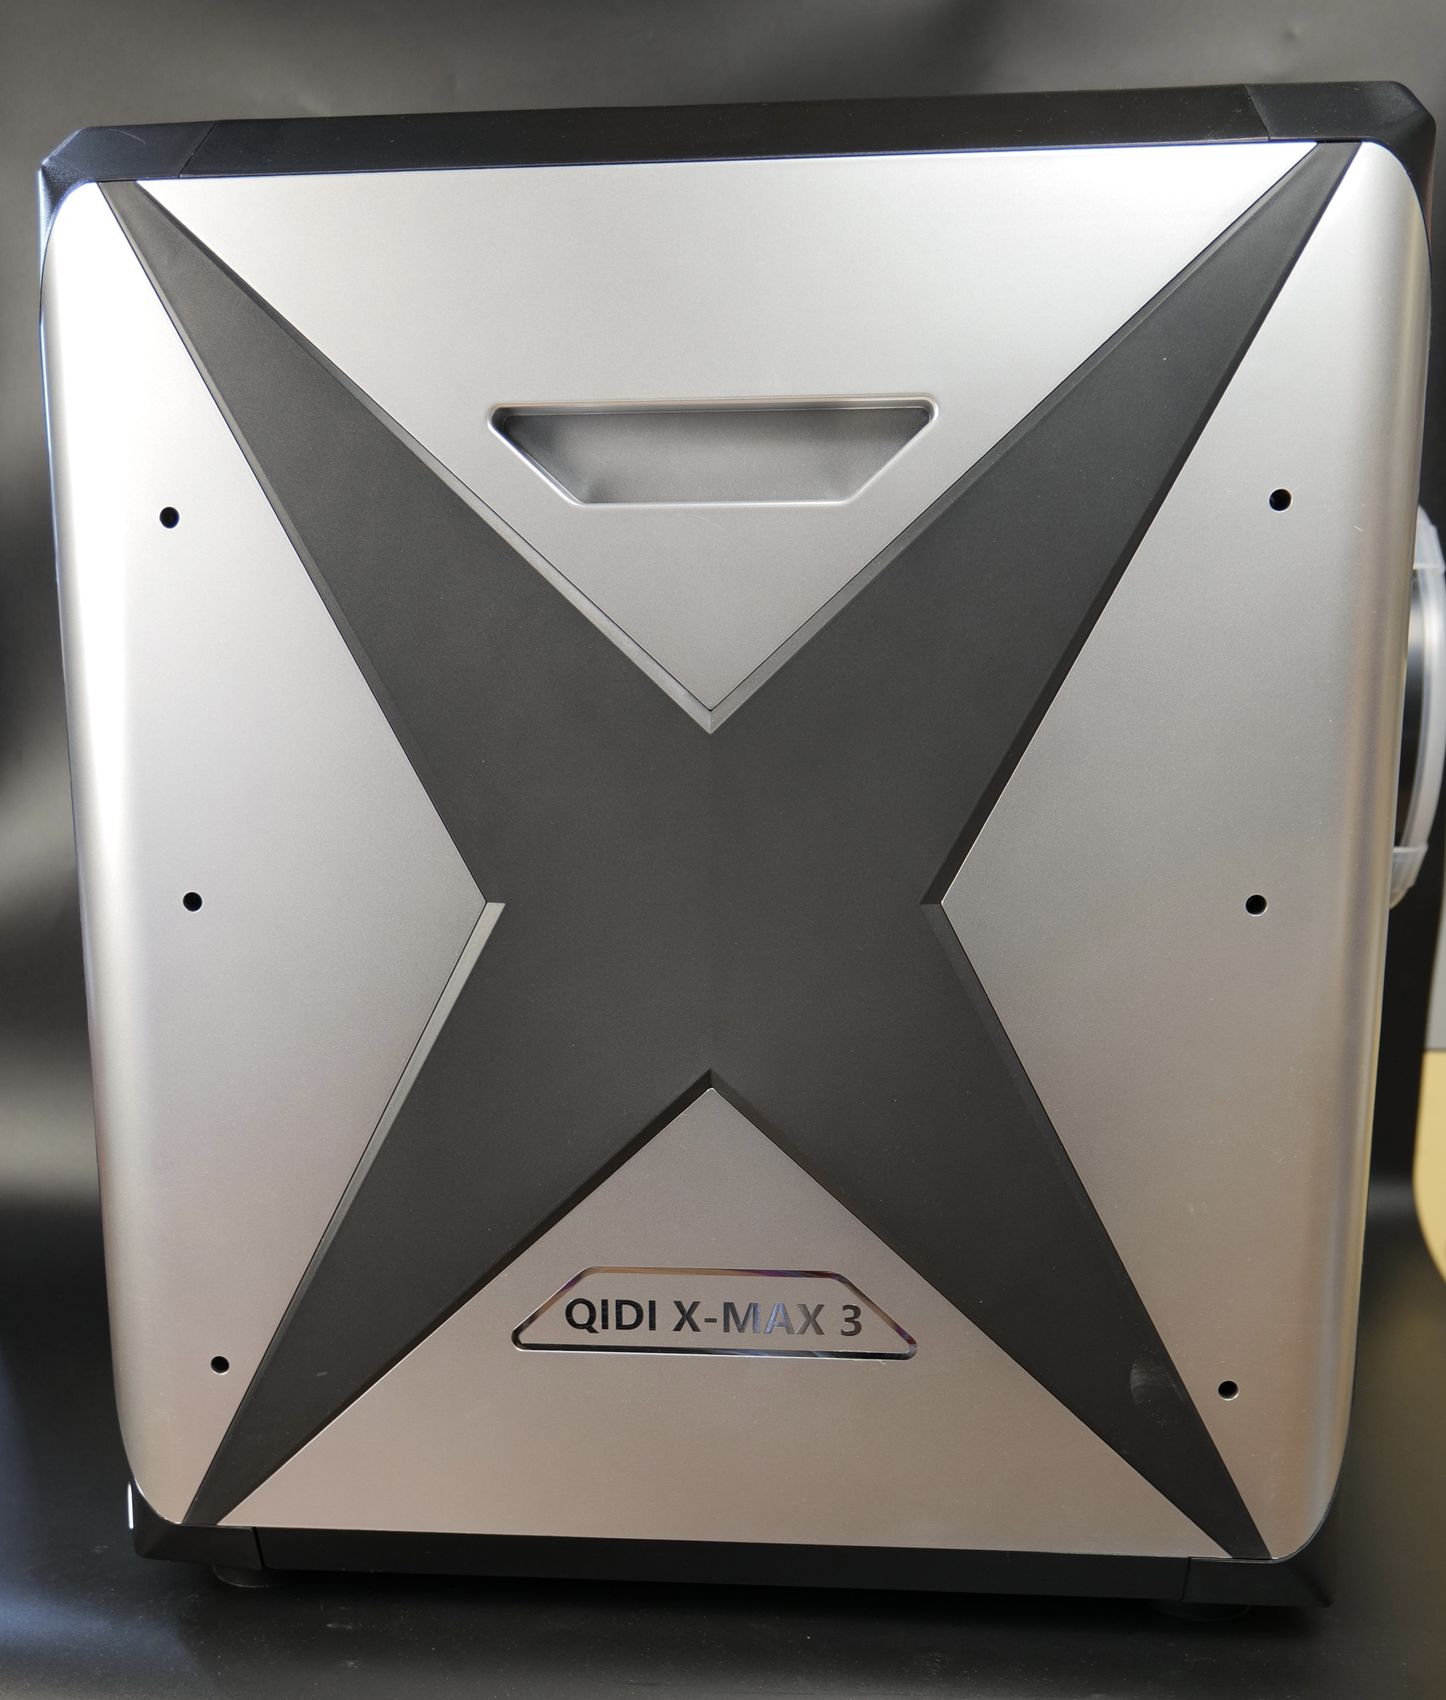 QIDI X MAX 3 Design4 | QIDI X-MAX 3 Review: Big Printer with Good Results